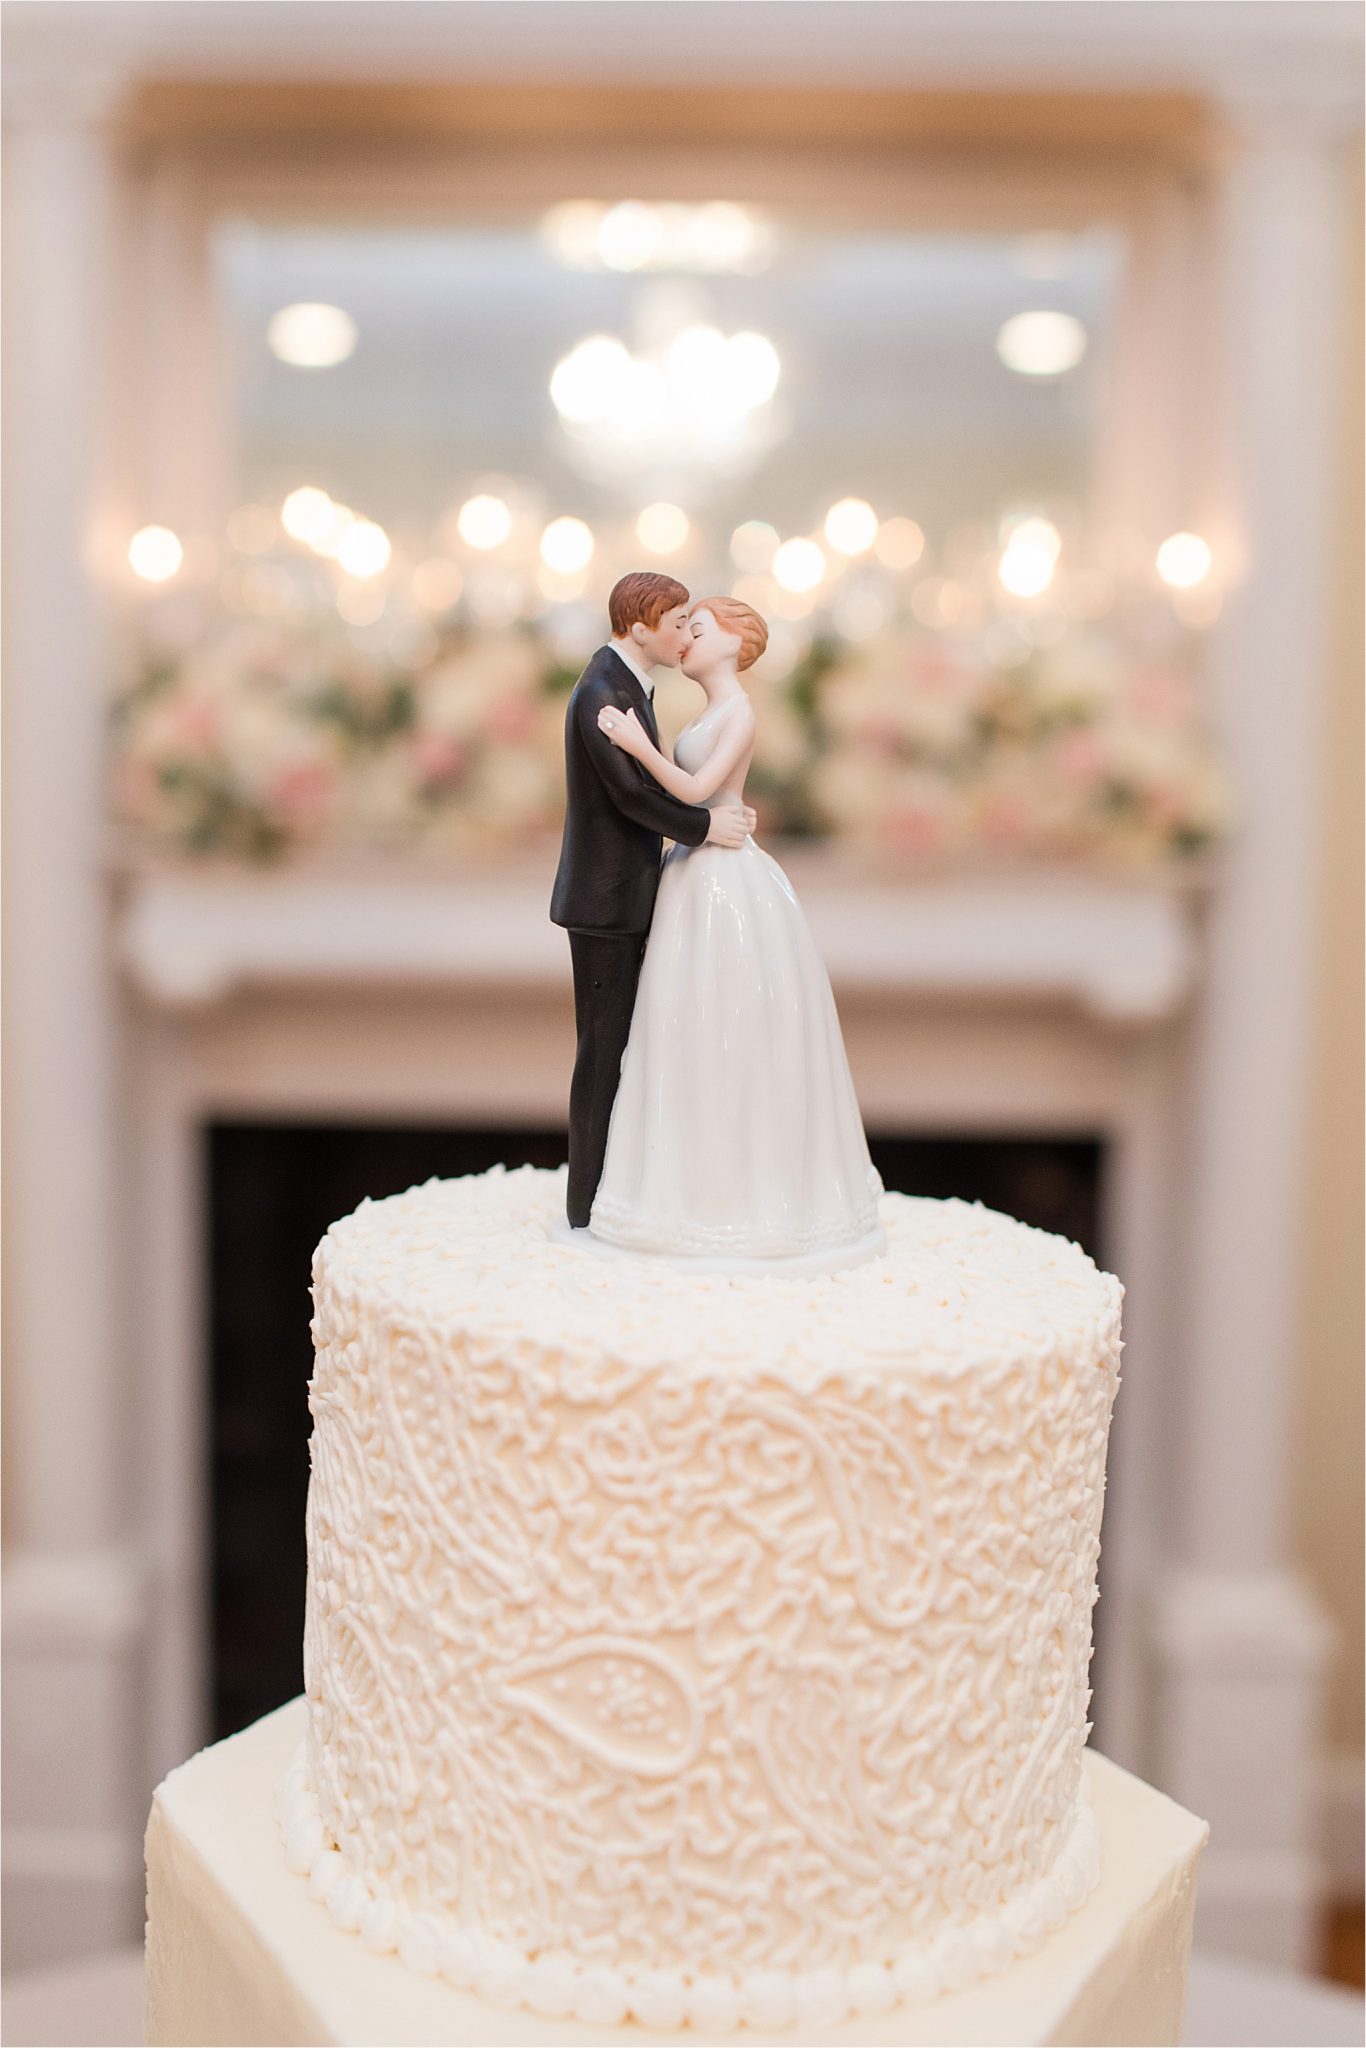 Sonnet House, Birmingham Alabama Wedding Photographer, Traditional wedding cake, Wedding dessert